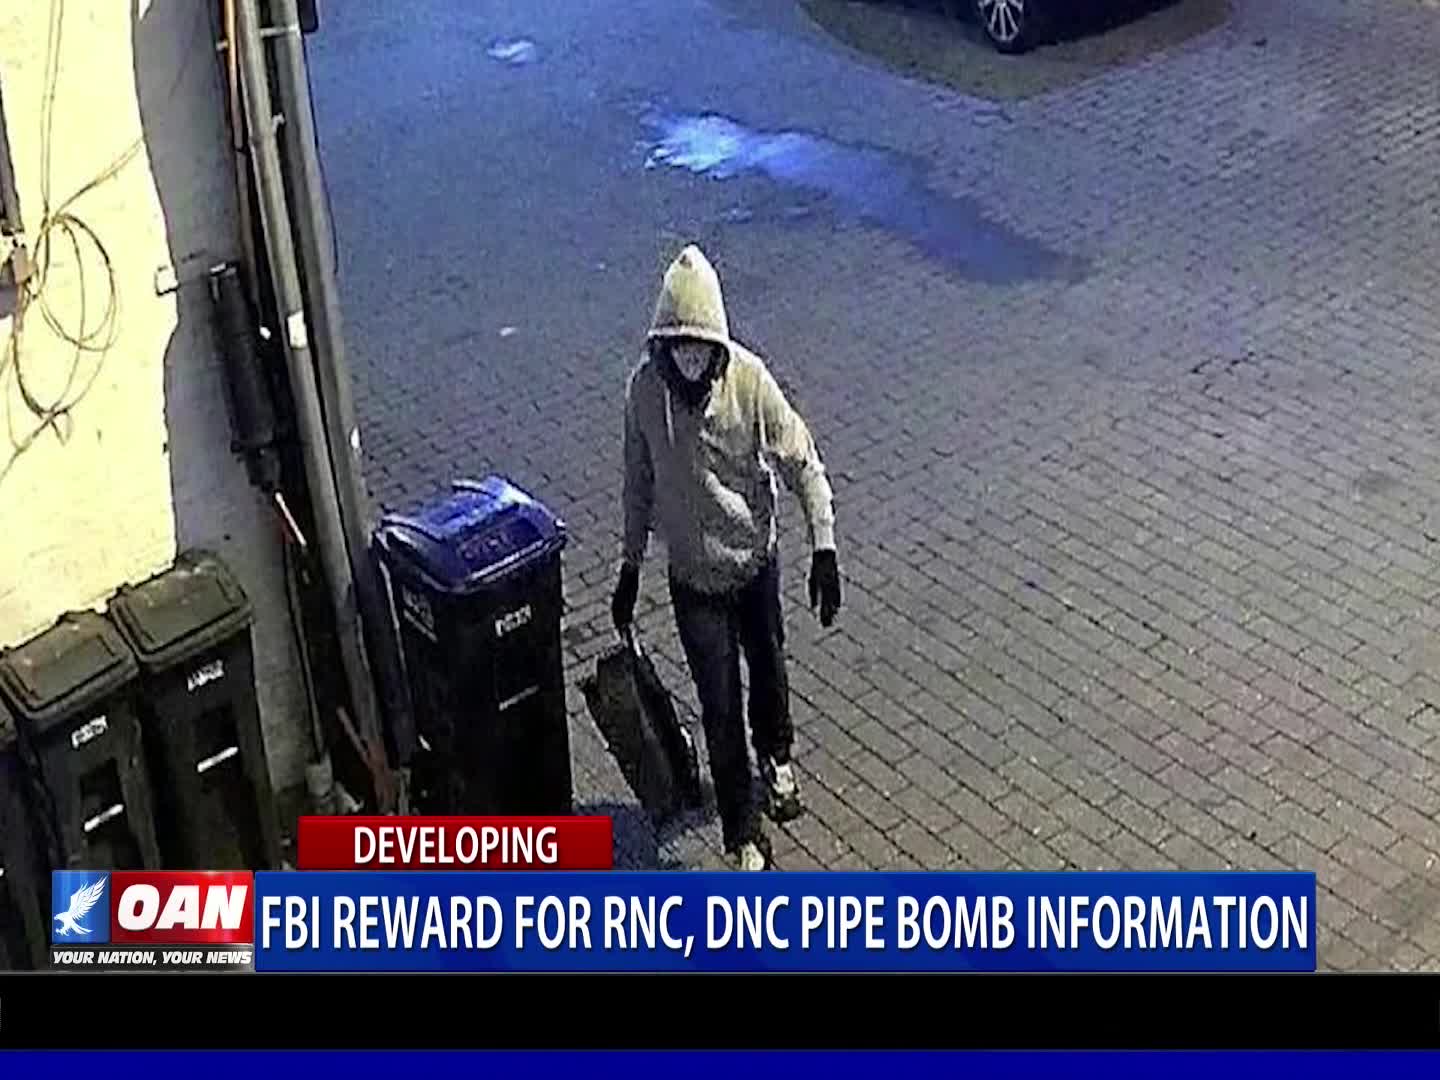 FBI reward for RNC, DNC pipe bomb information